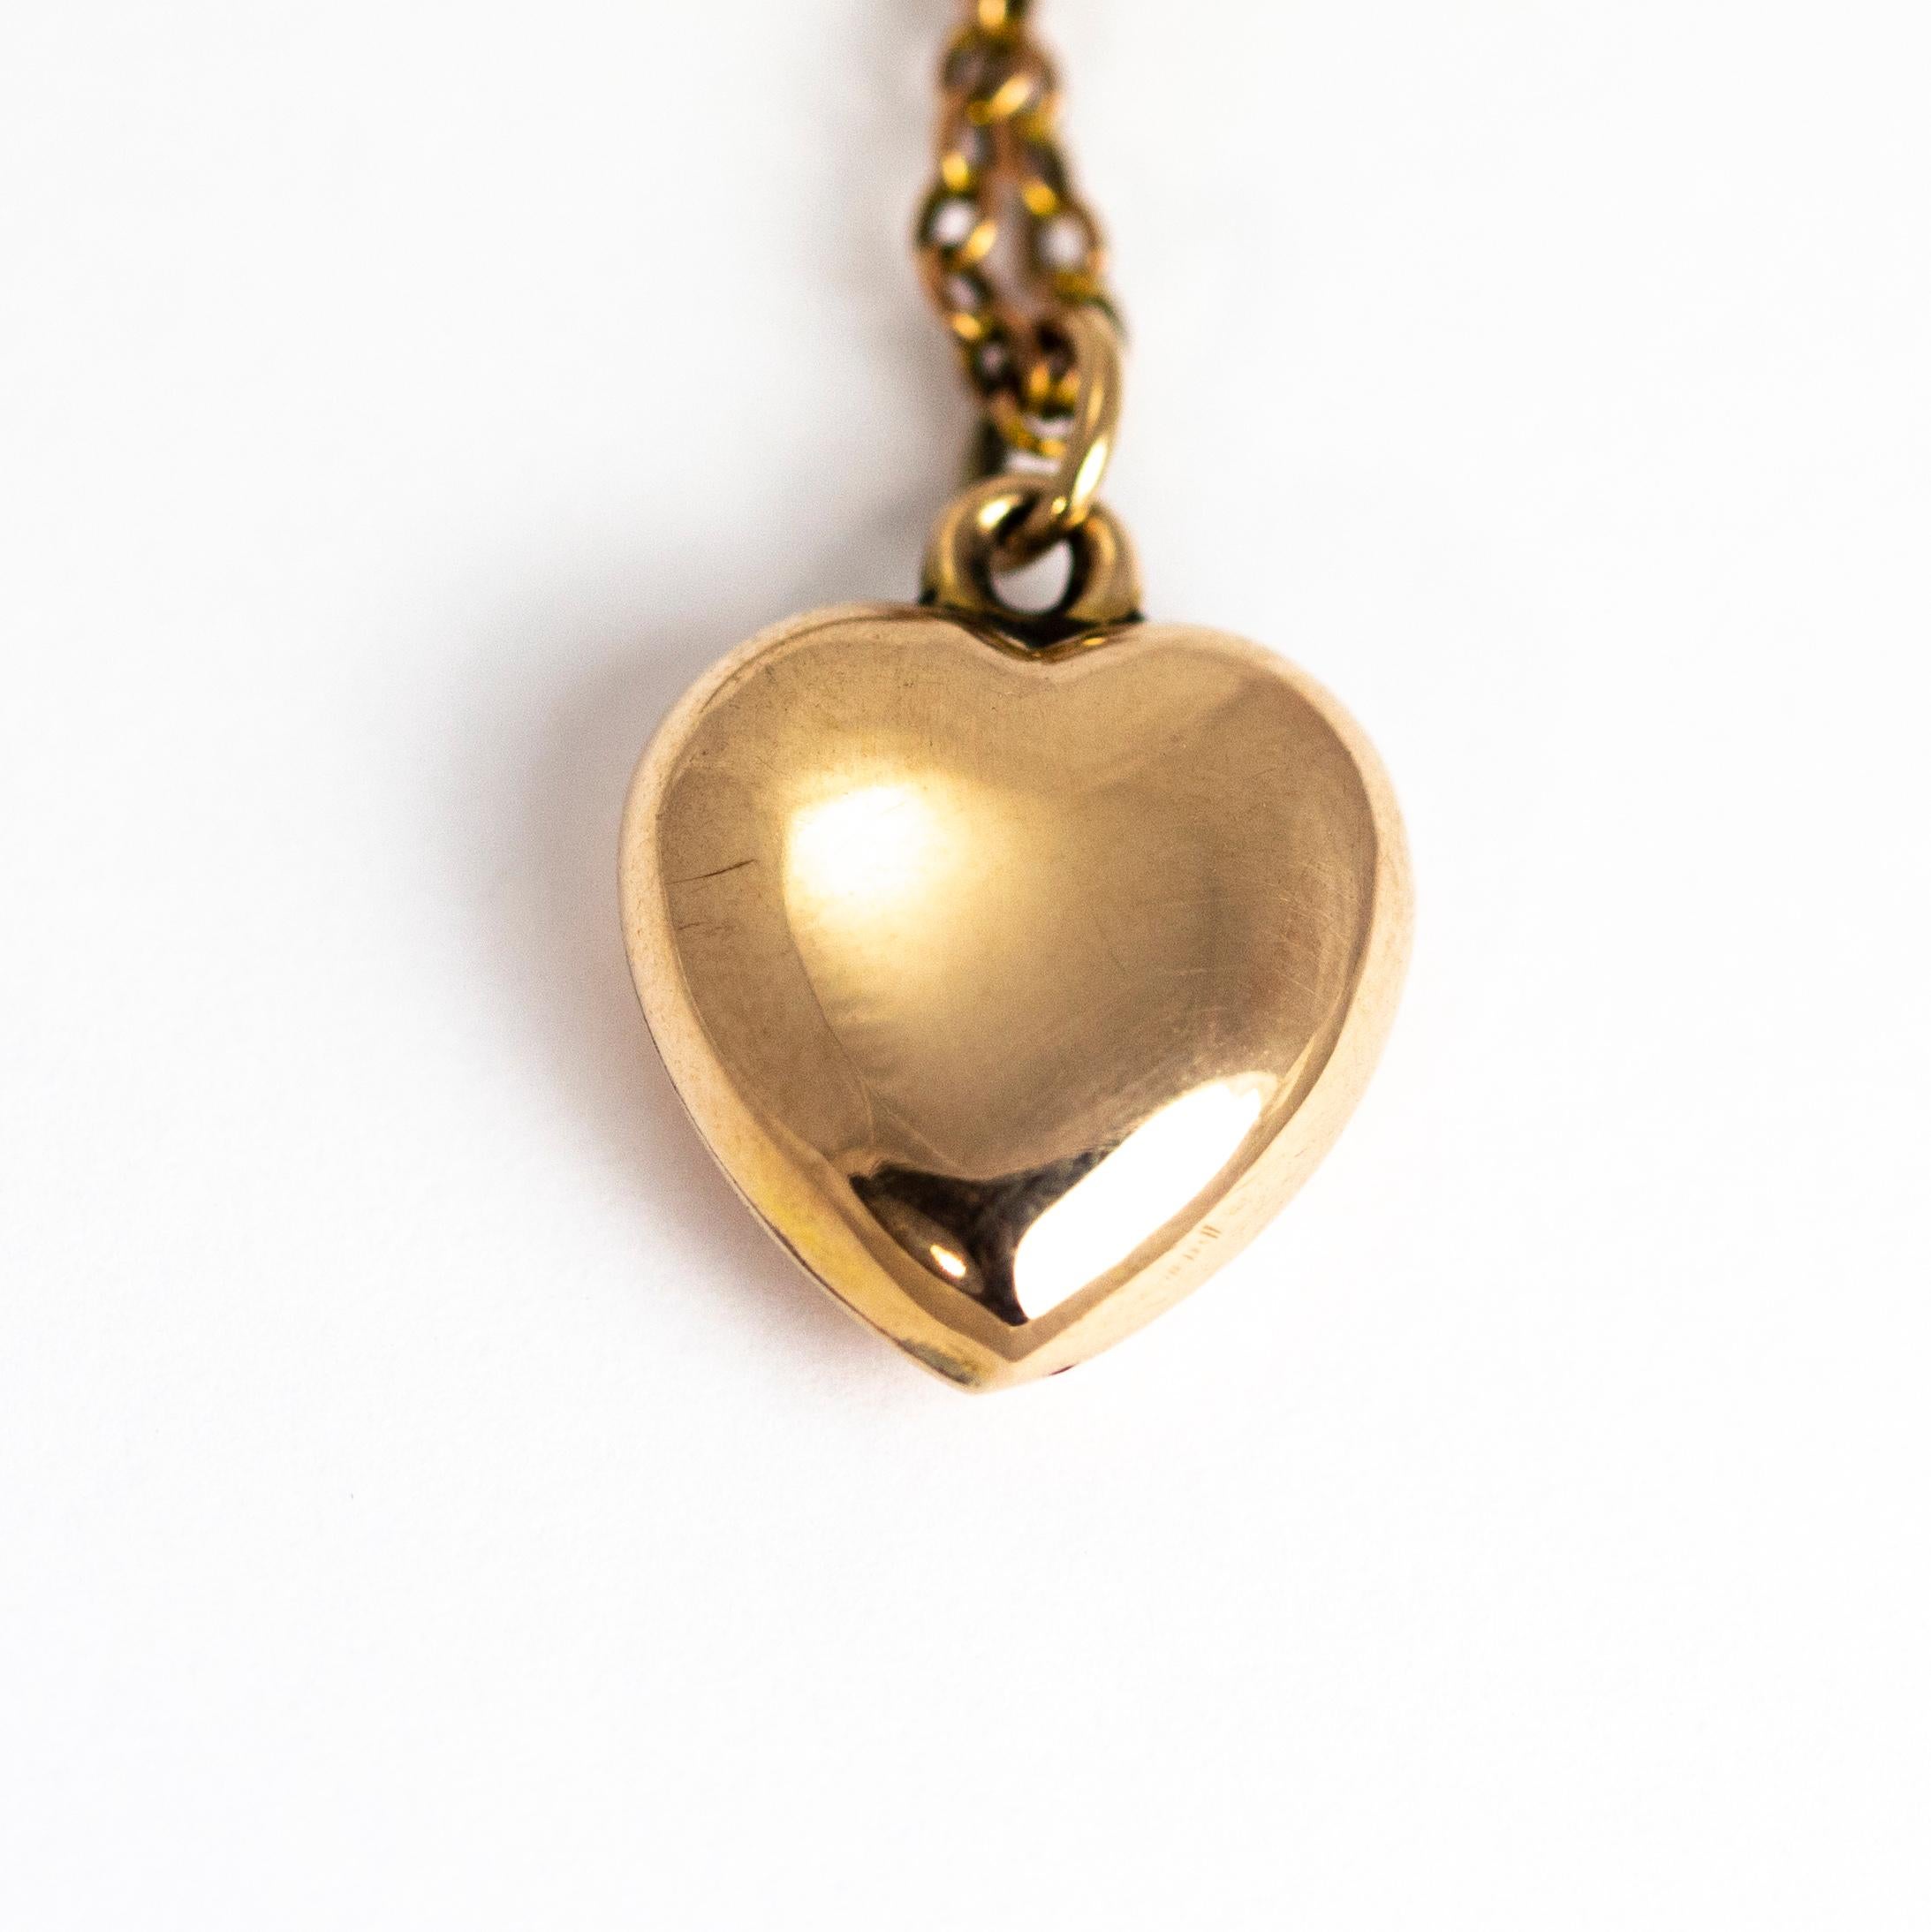 9 carat gold pendant